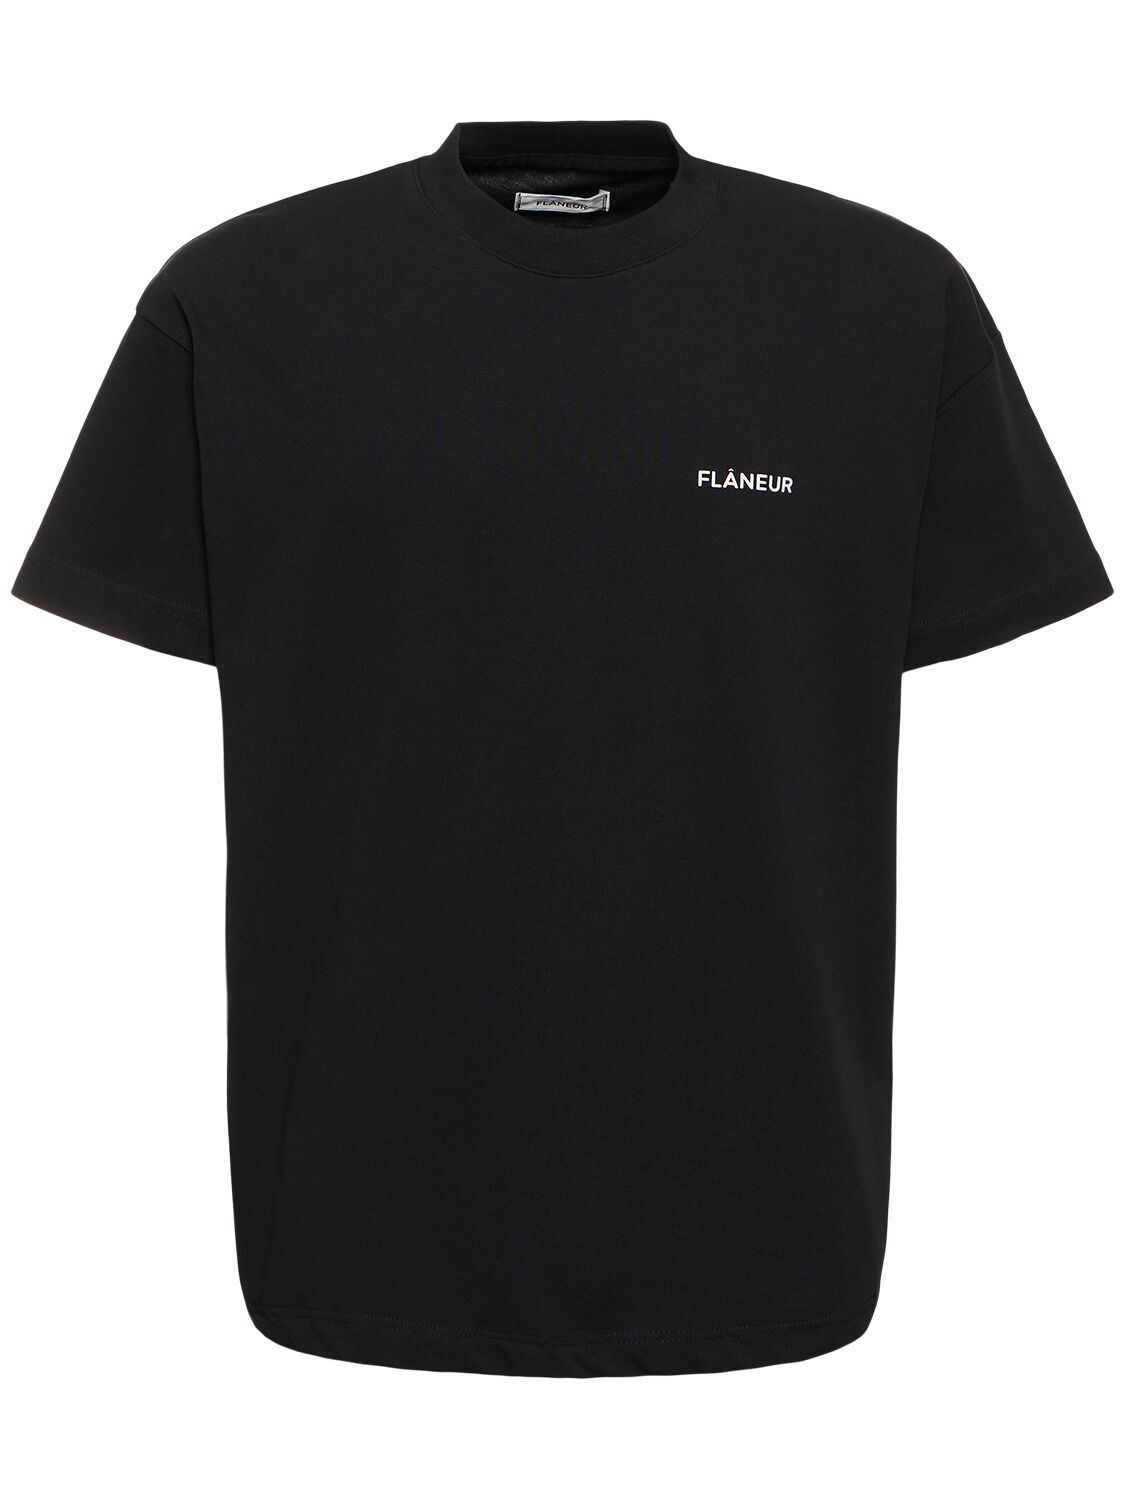 Flâneur Essential T-shirt In Black Oc